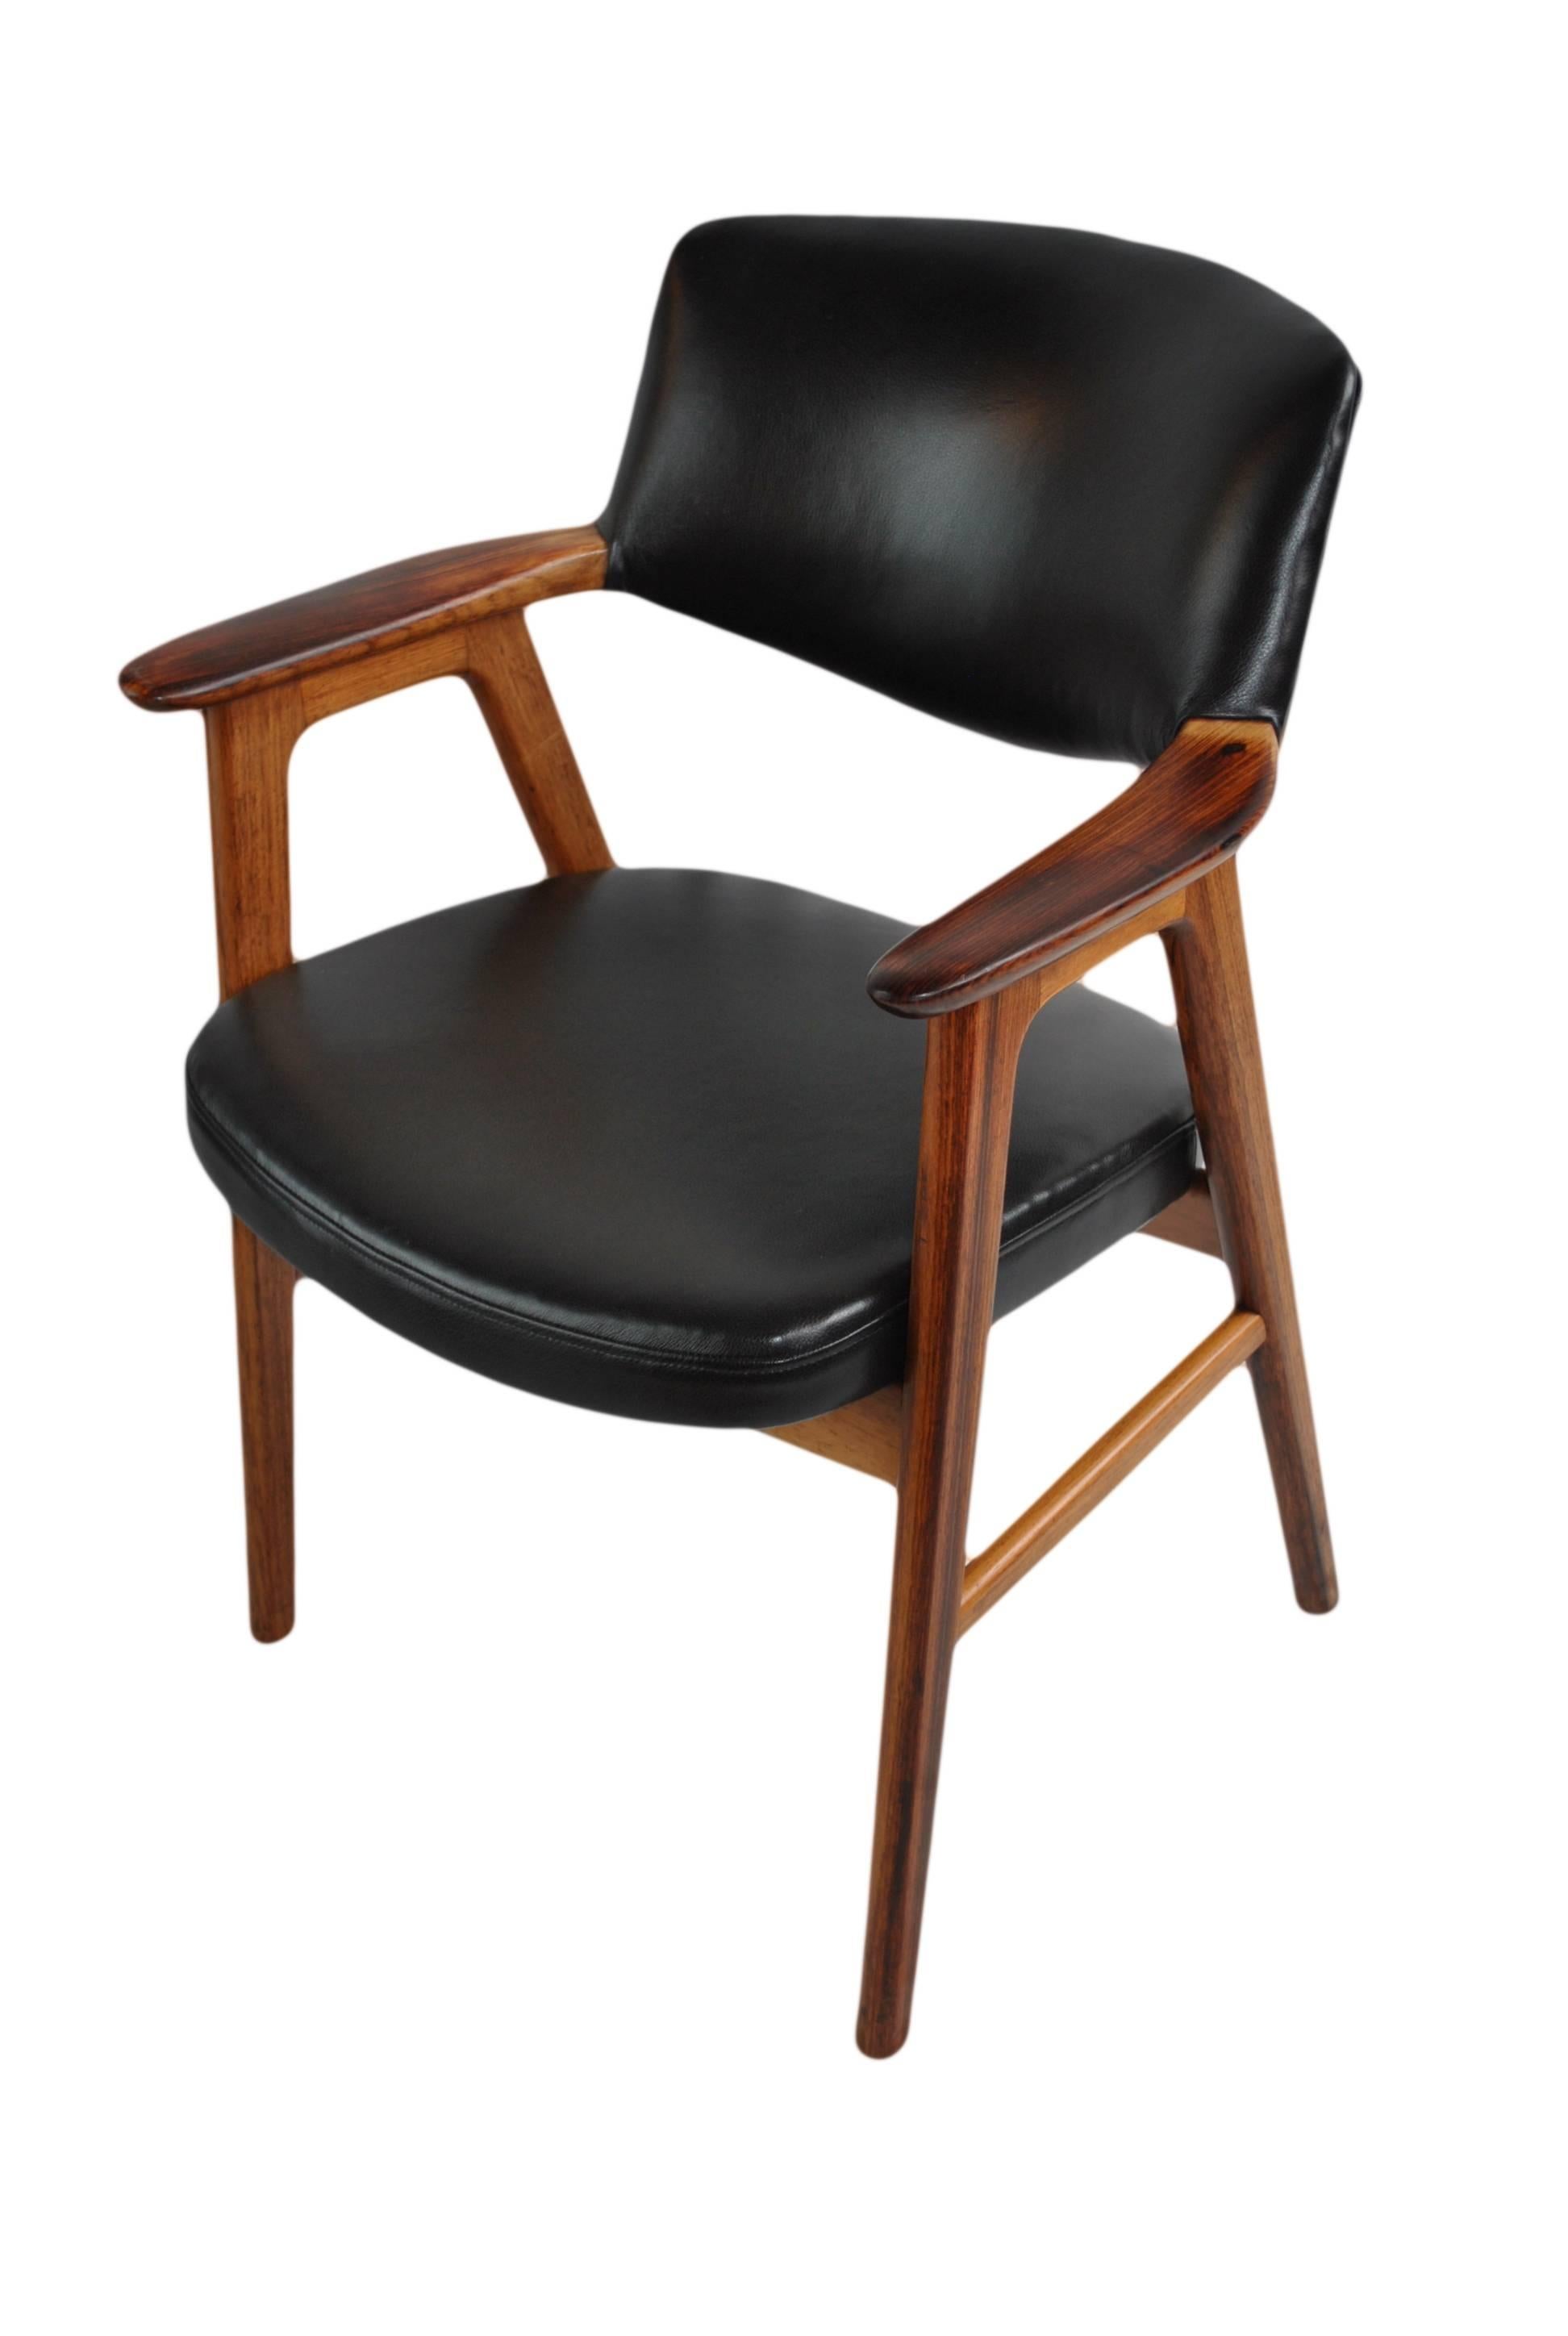 Pair of Fully Restored and Reupholstered Erik Kirkegaard Chairs 1